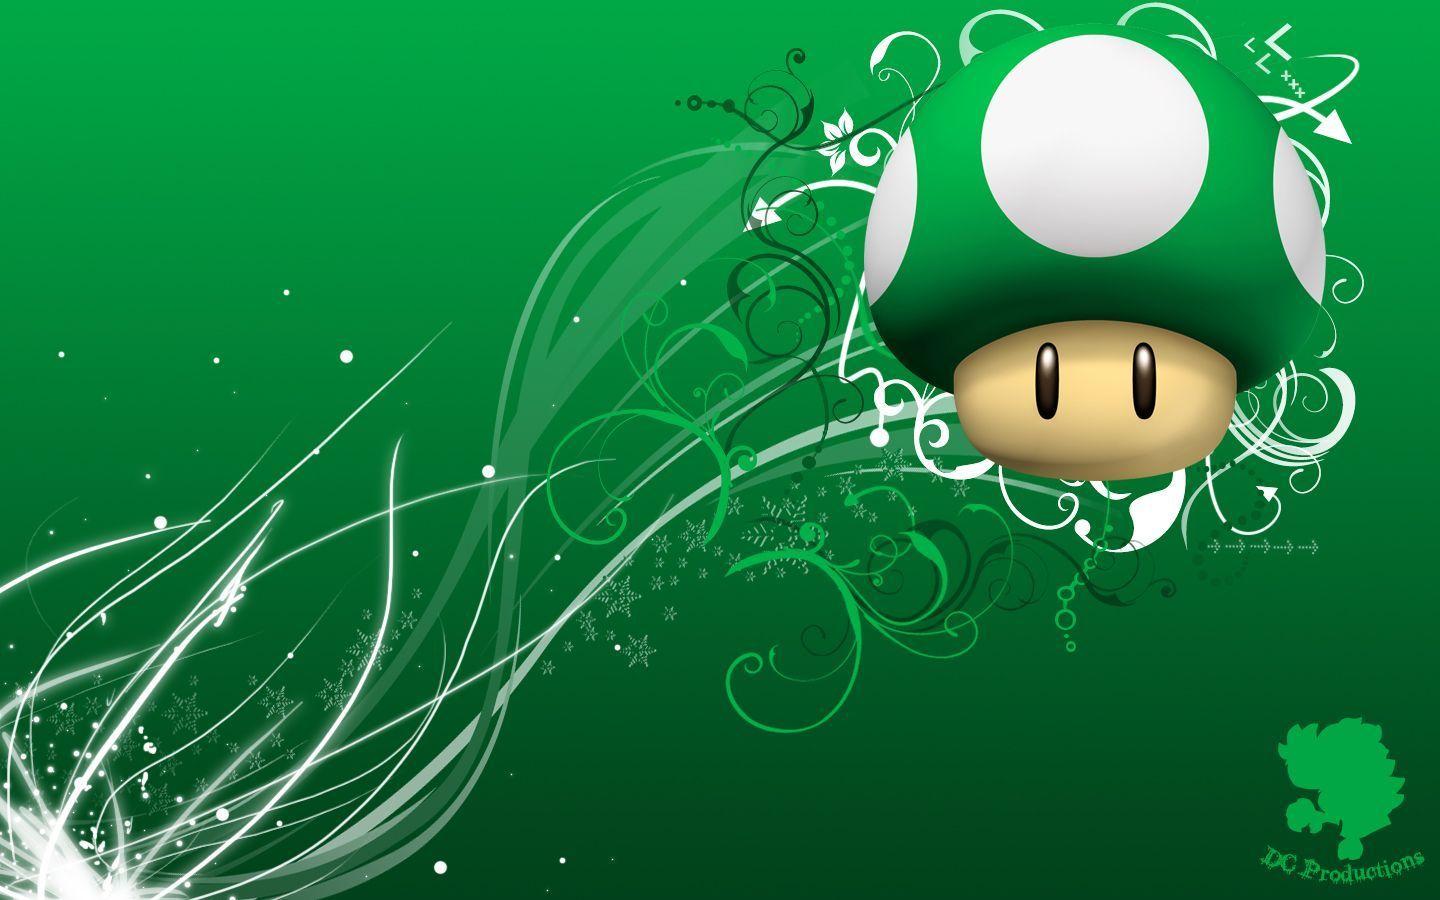 Mario 1up Mushroom Wallpaper Image & Picture